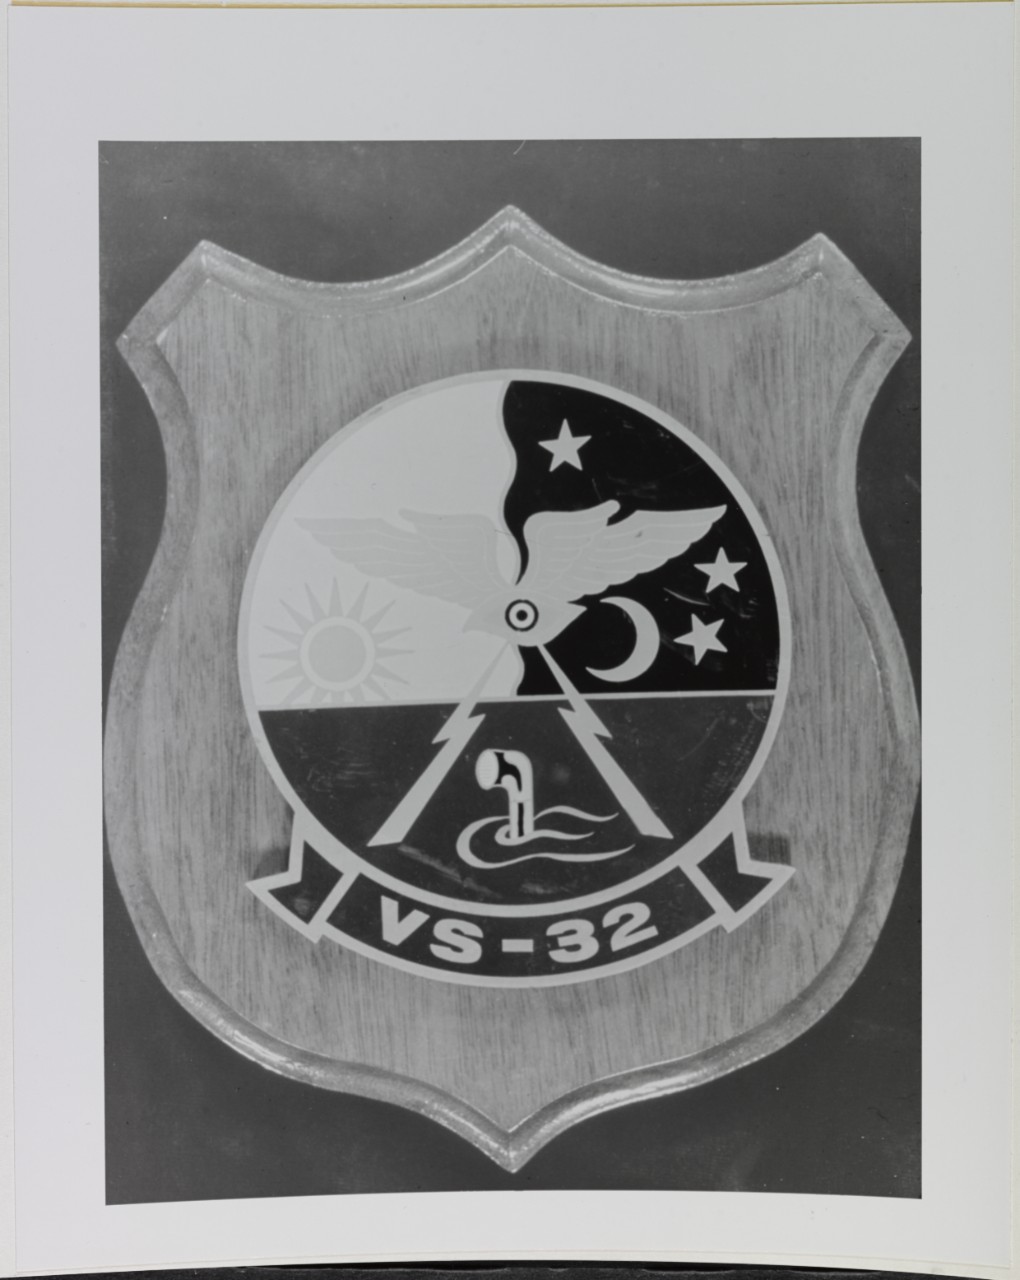 Insignia:  Antisubmarine Squadron Thirty-Two (VS-32)